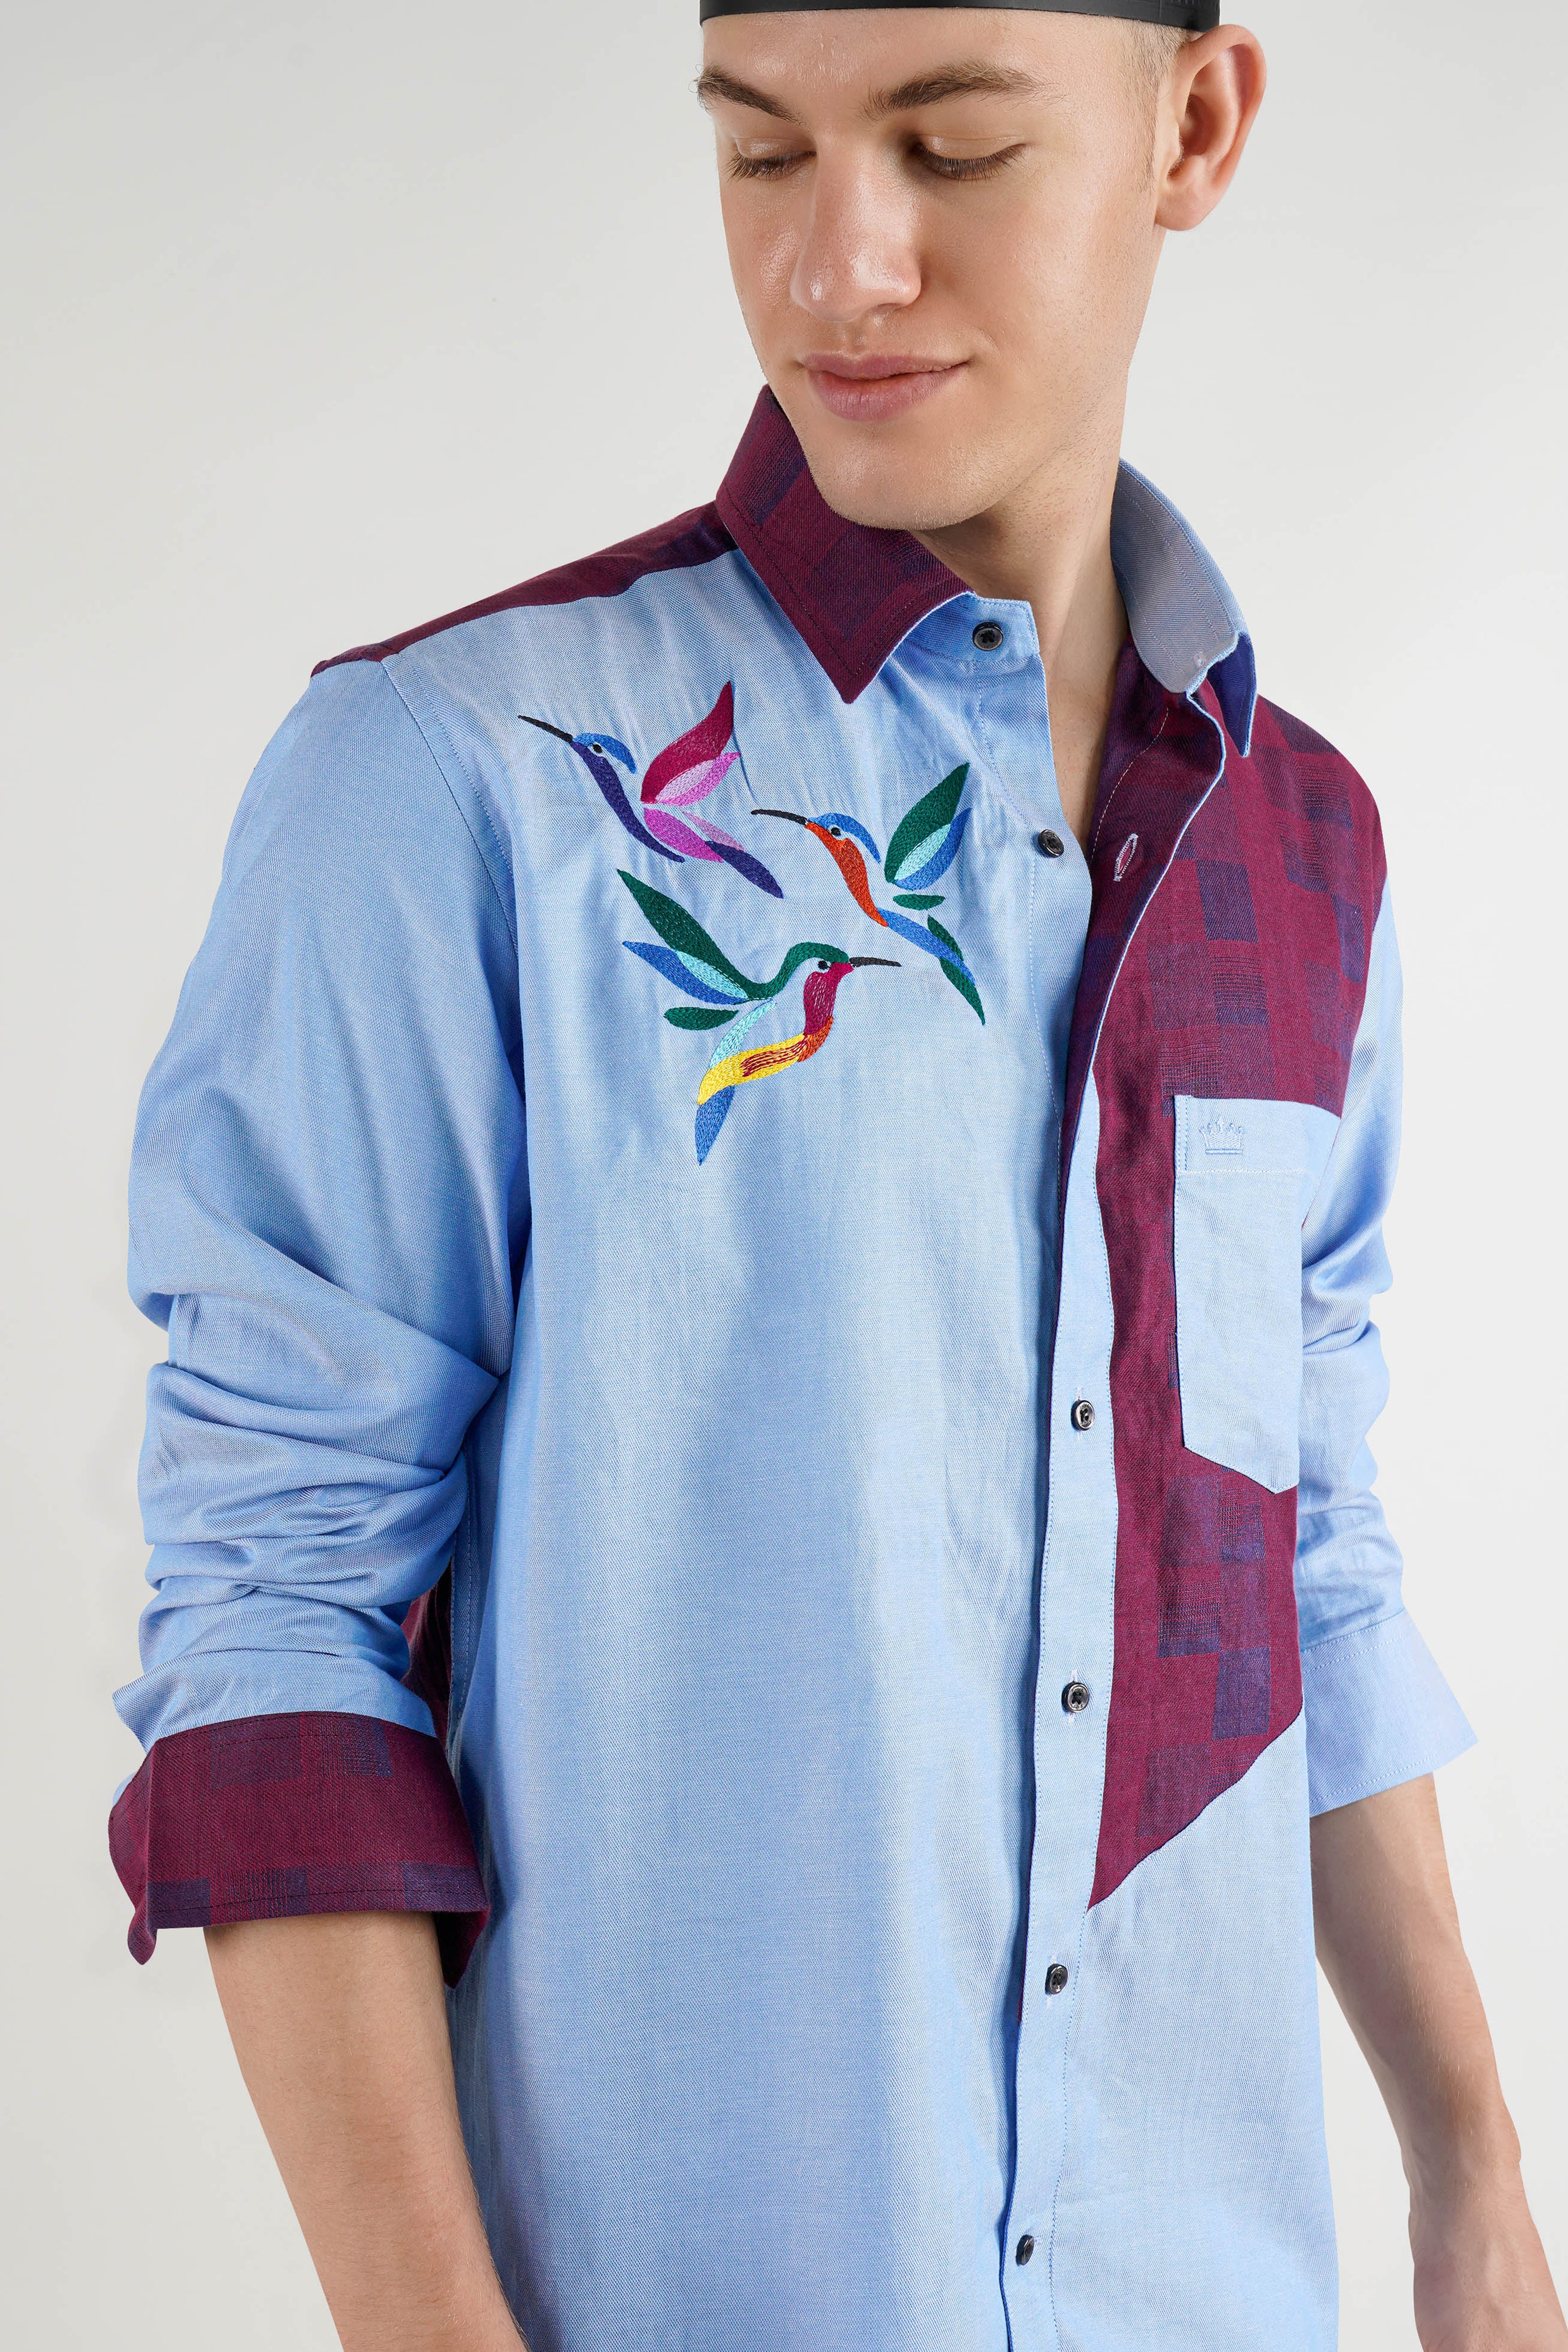 Casper Blue And Eclipse Wine Bird Embroidered Jacquard Textured Premium Cotton Designer Shirt.